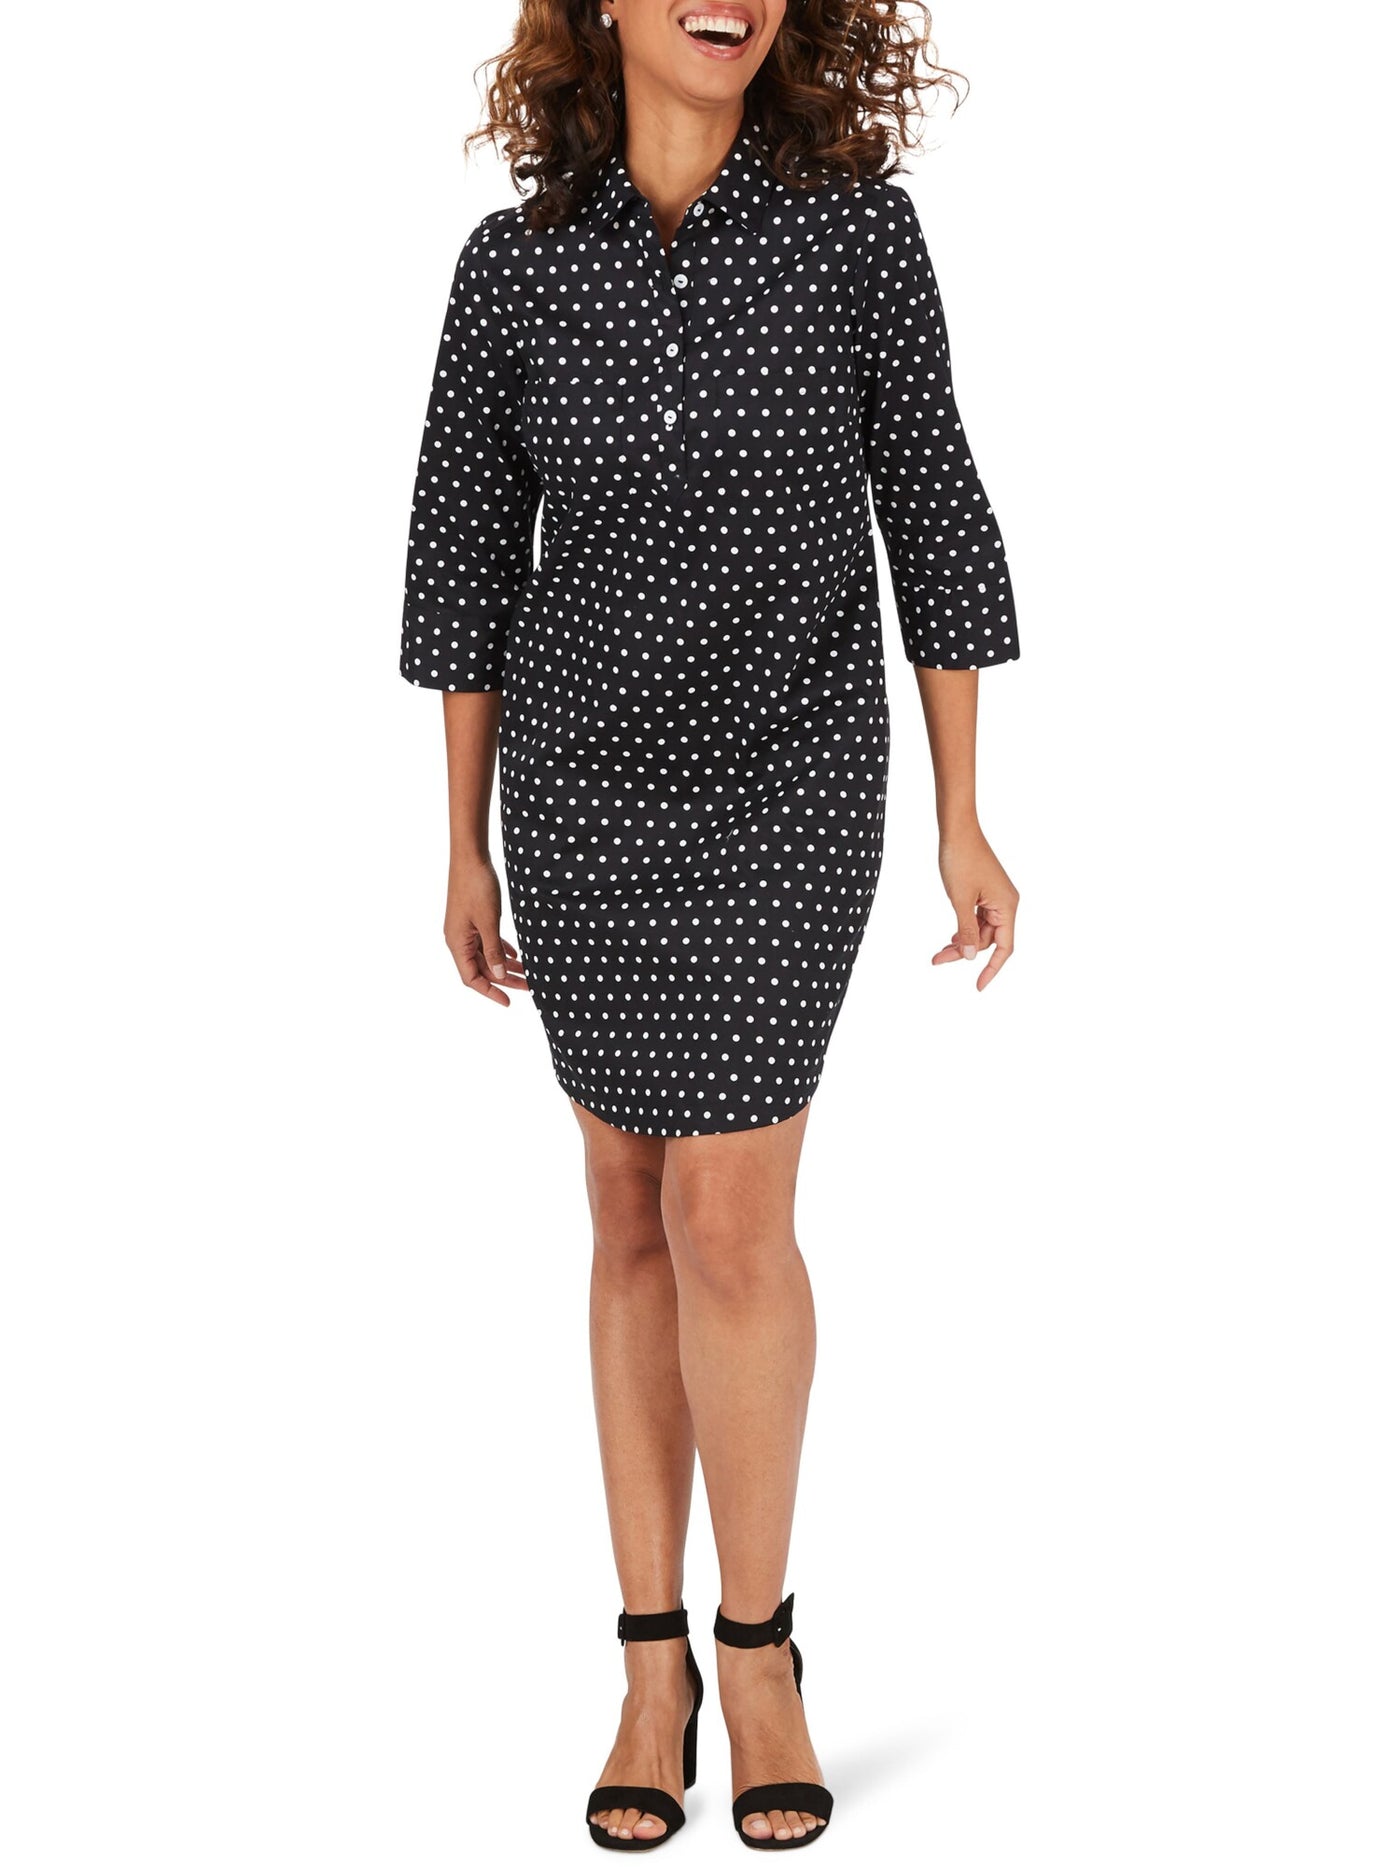 FOXCROFT Womens Black Polka Dot 3/4 Sleeve Collared Above The Knee Wear To Work Shirt Dress 2